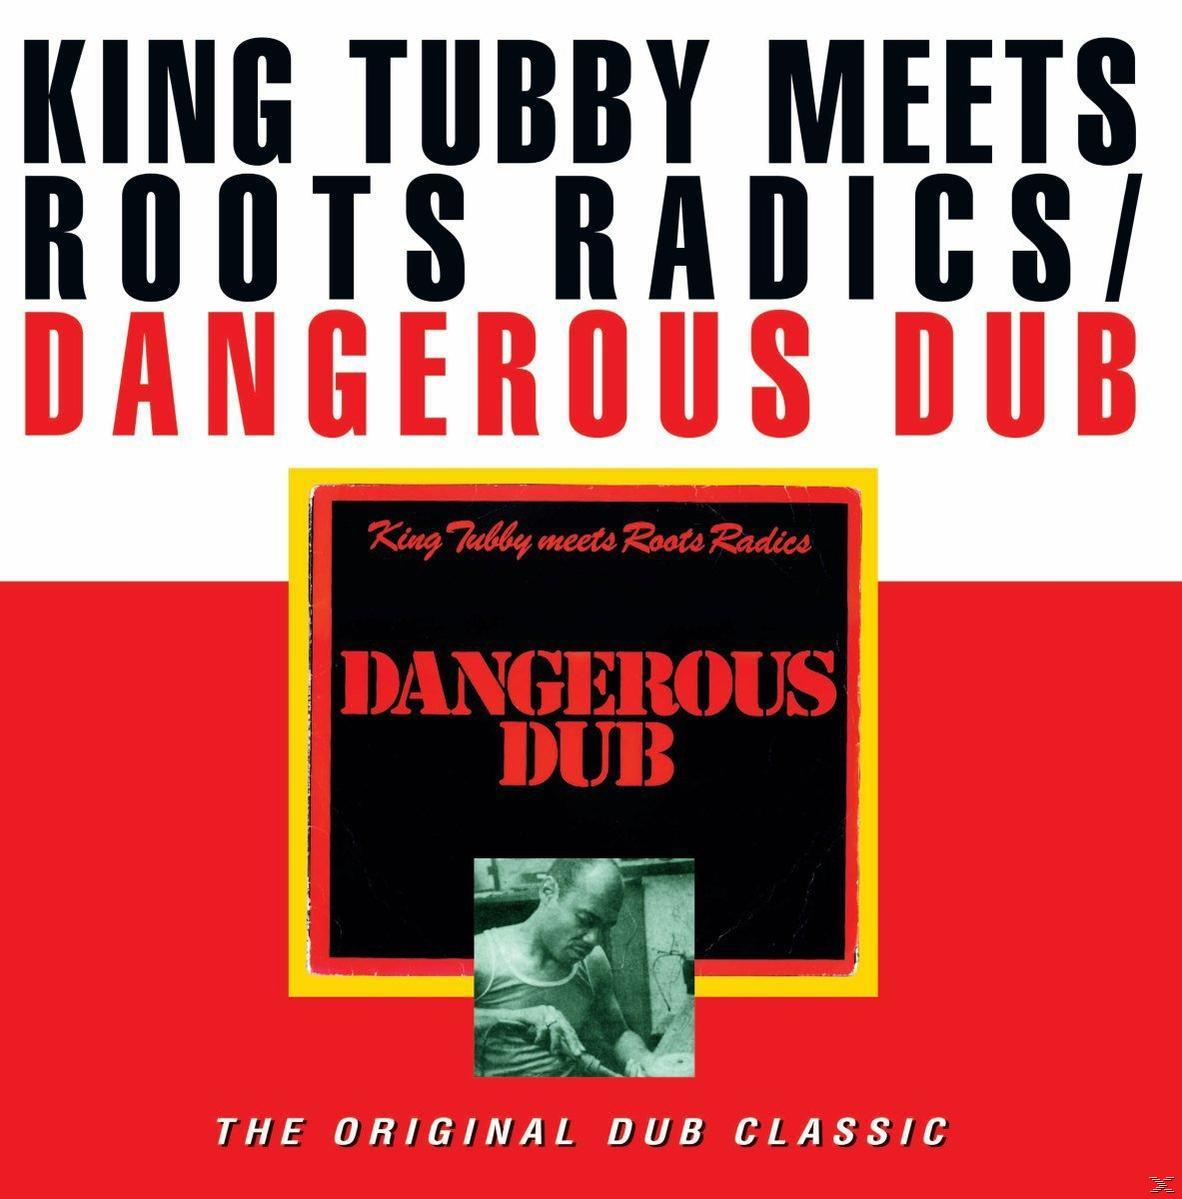 DUB CLASSIC) ORIGINAL King Meets (Vinyl) Tubby - DUB (THE Roots DANGEROUS - Radics